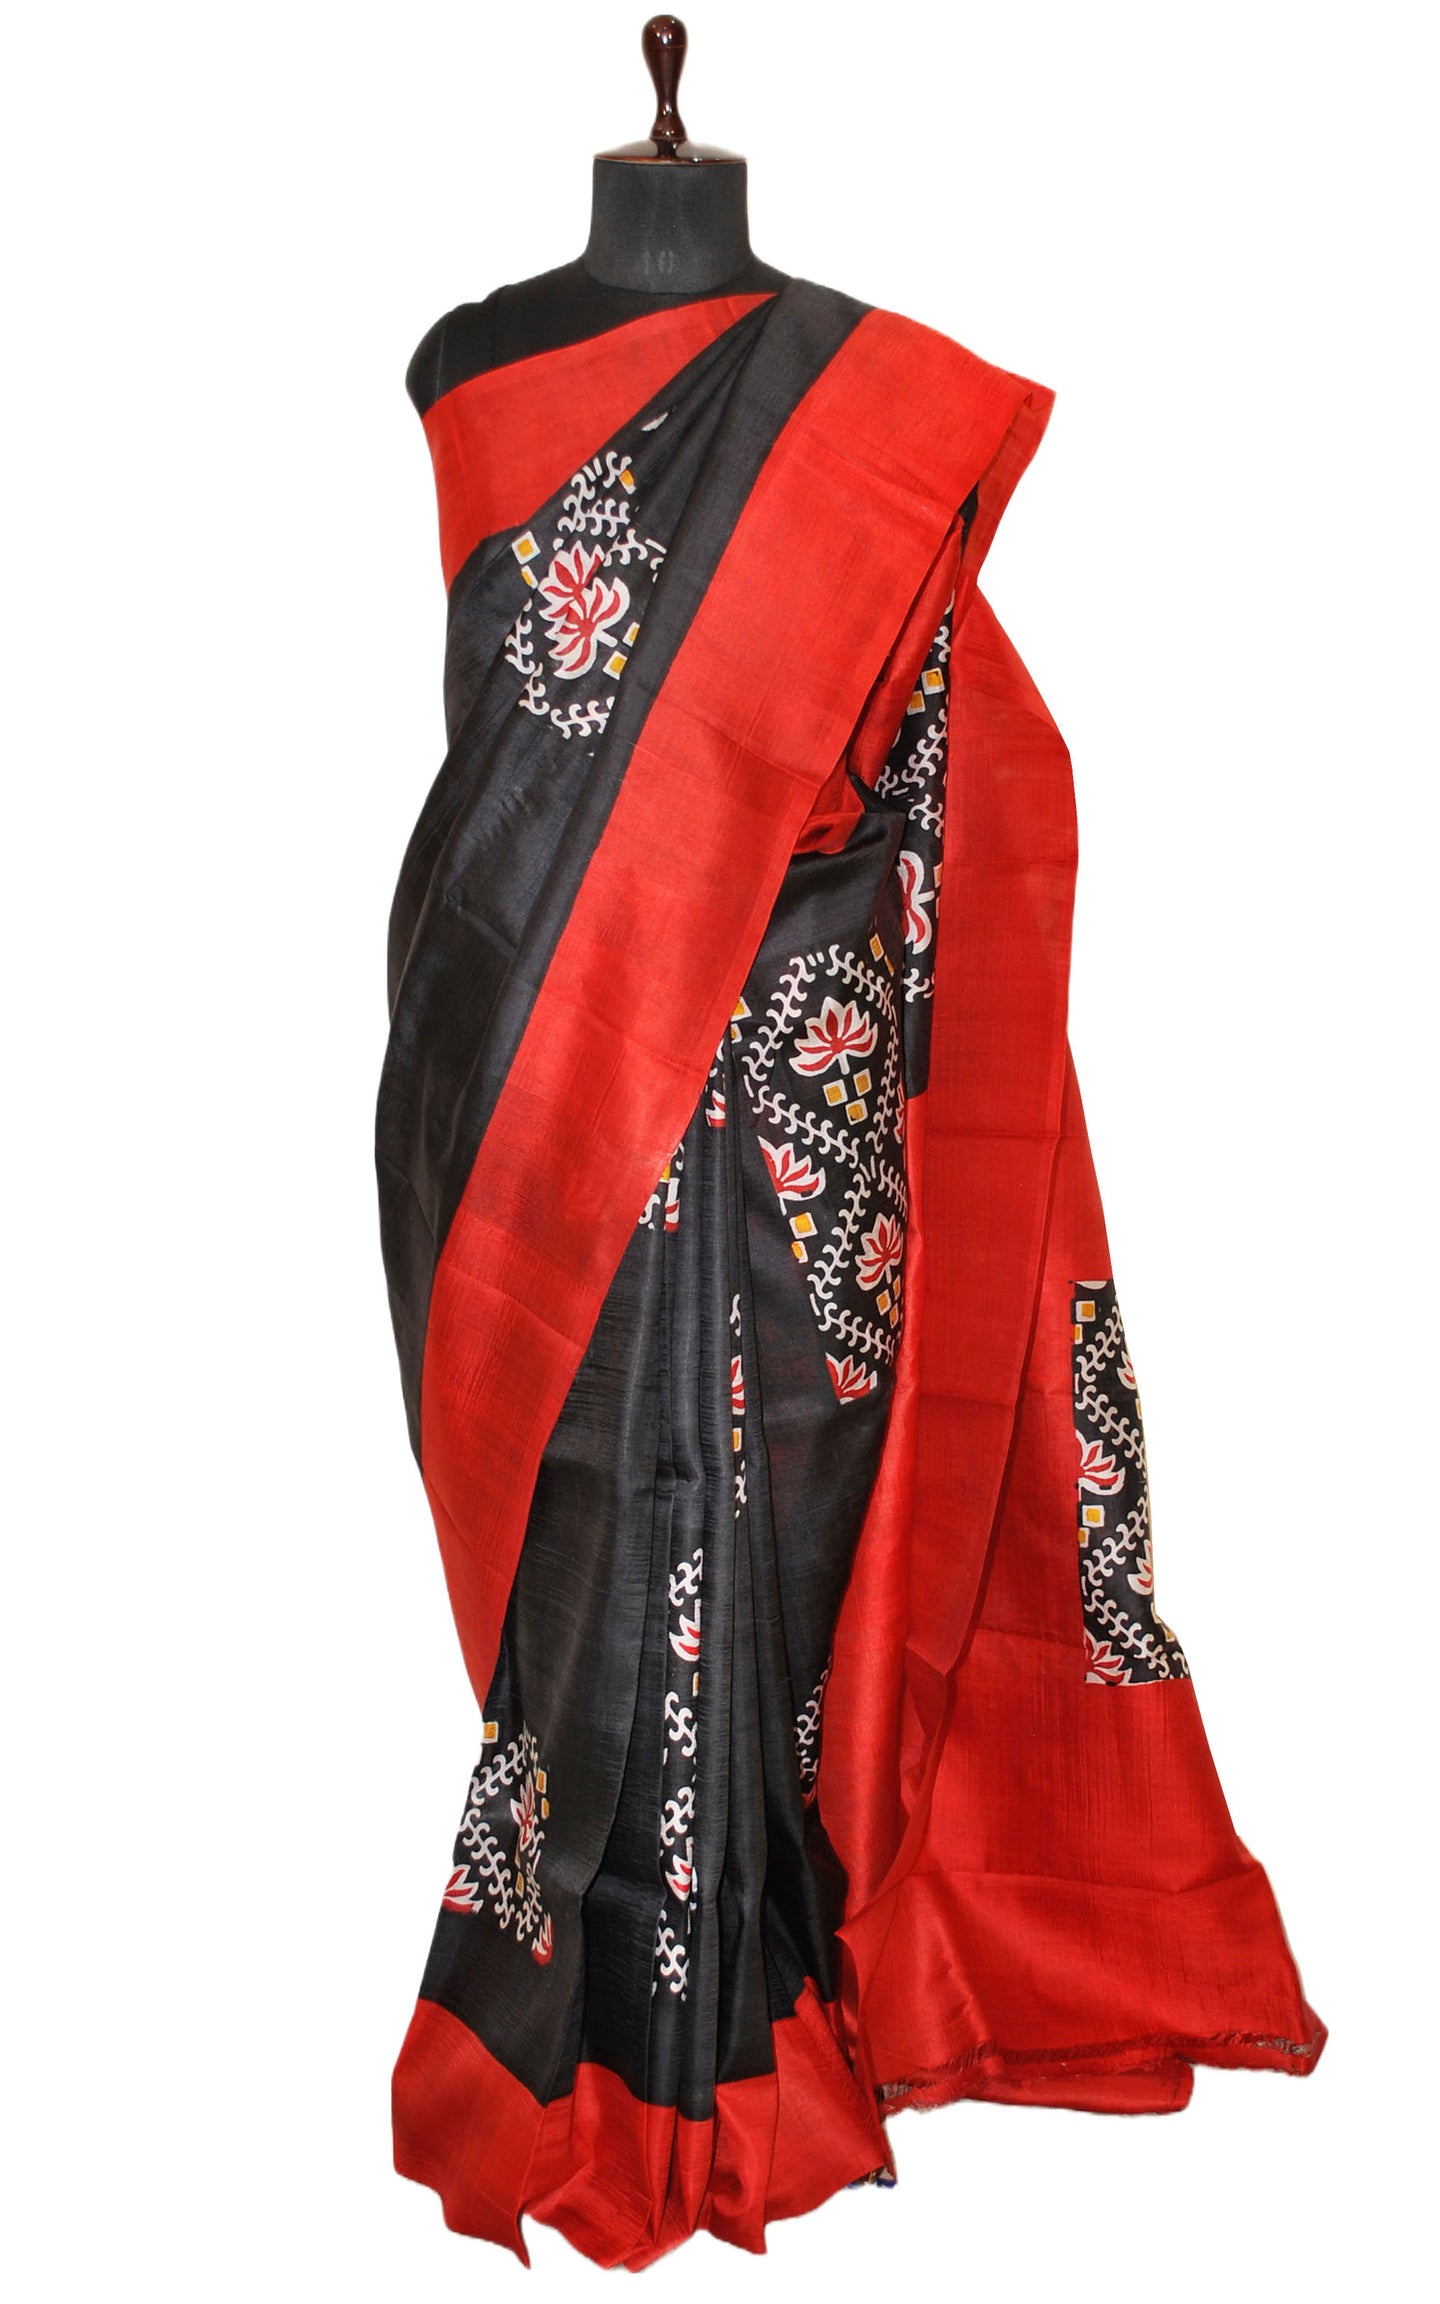 Madathasu Ikkat Printed Pure Silk Saree in Black, Red, Off White and Bright Yellow